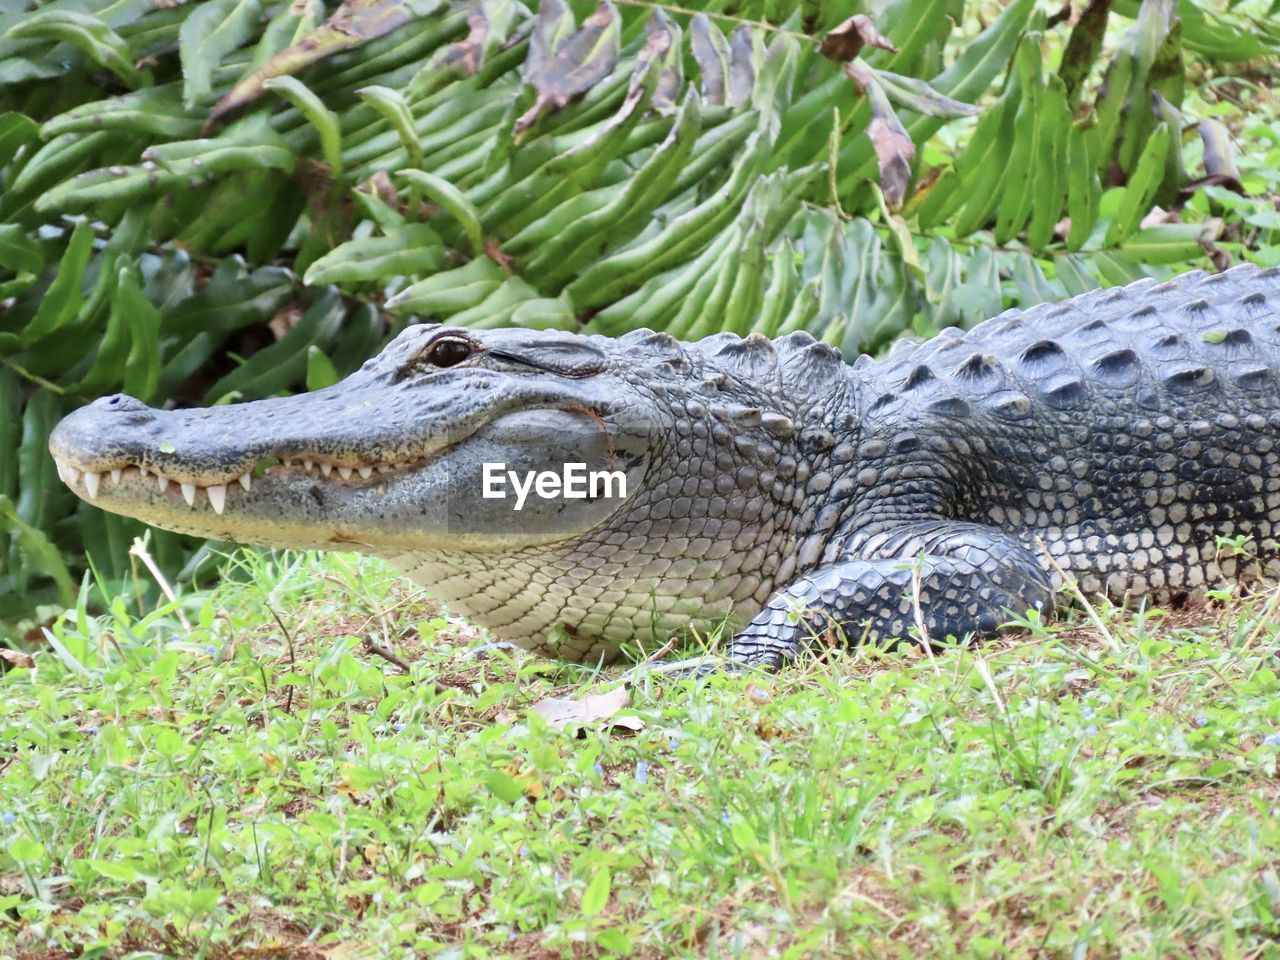 Closeup of an alligator